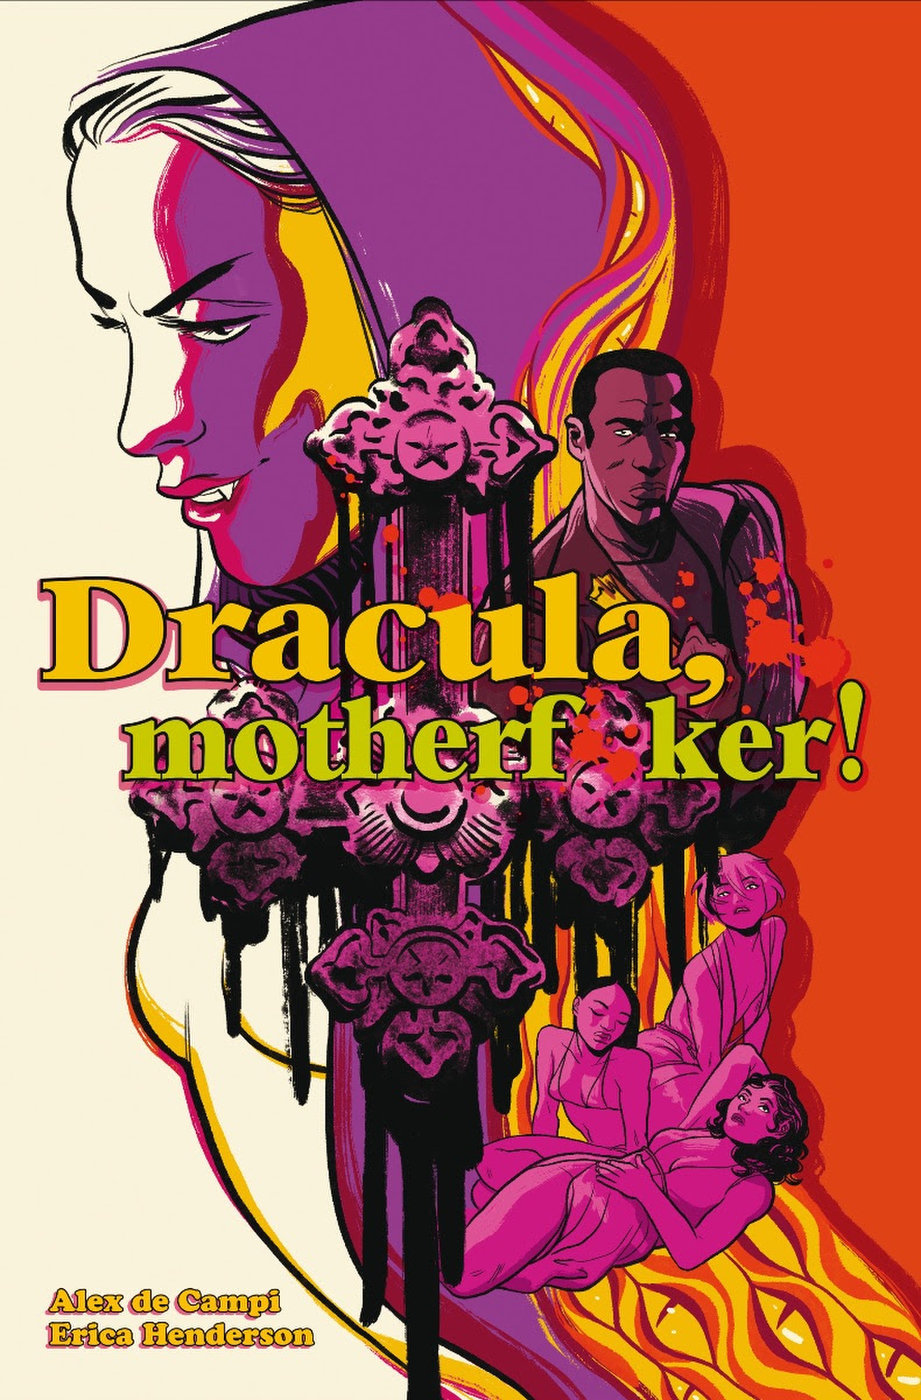 Dracula, Motherf**ker #1